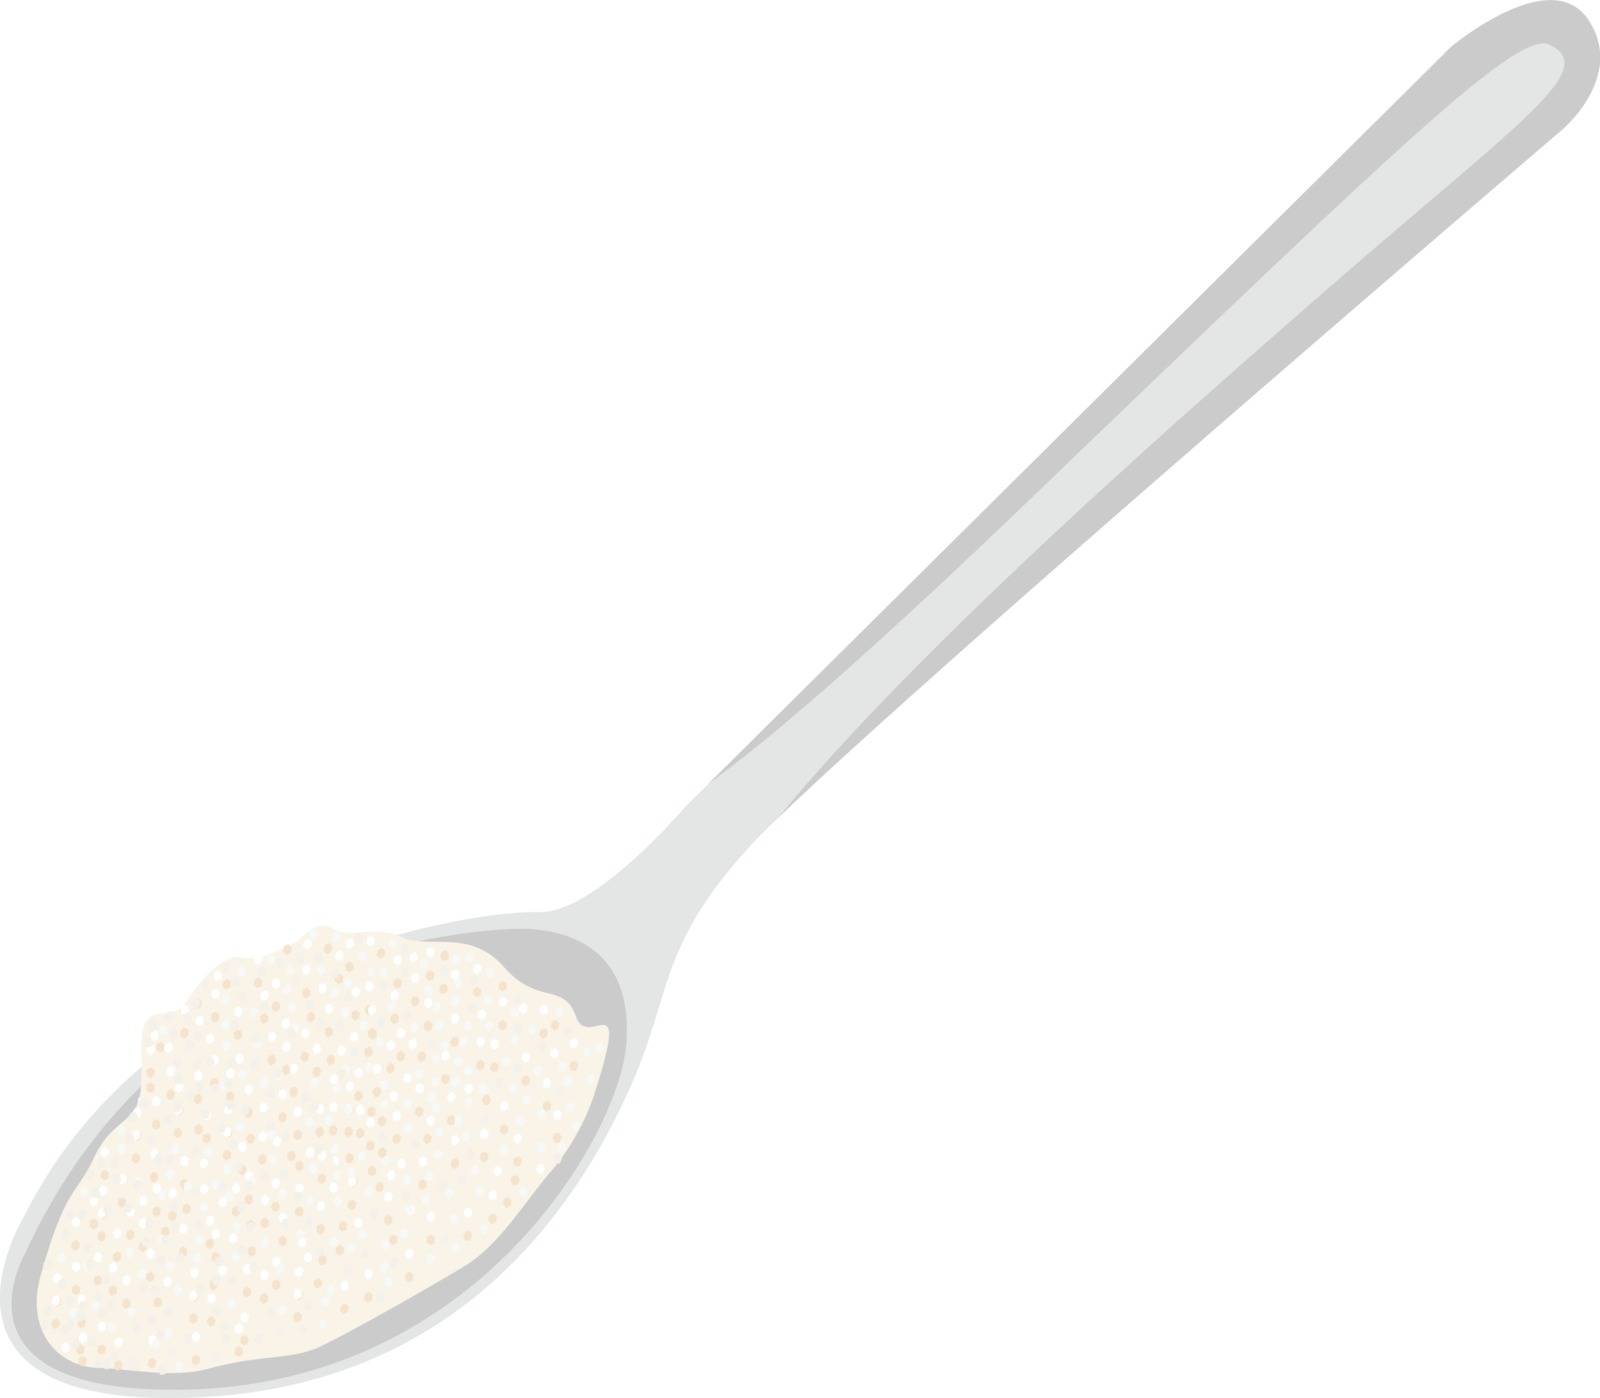 Spoon with sugar by Olena758